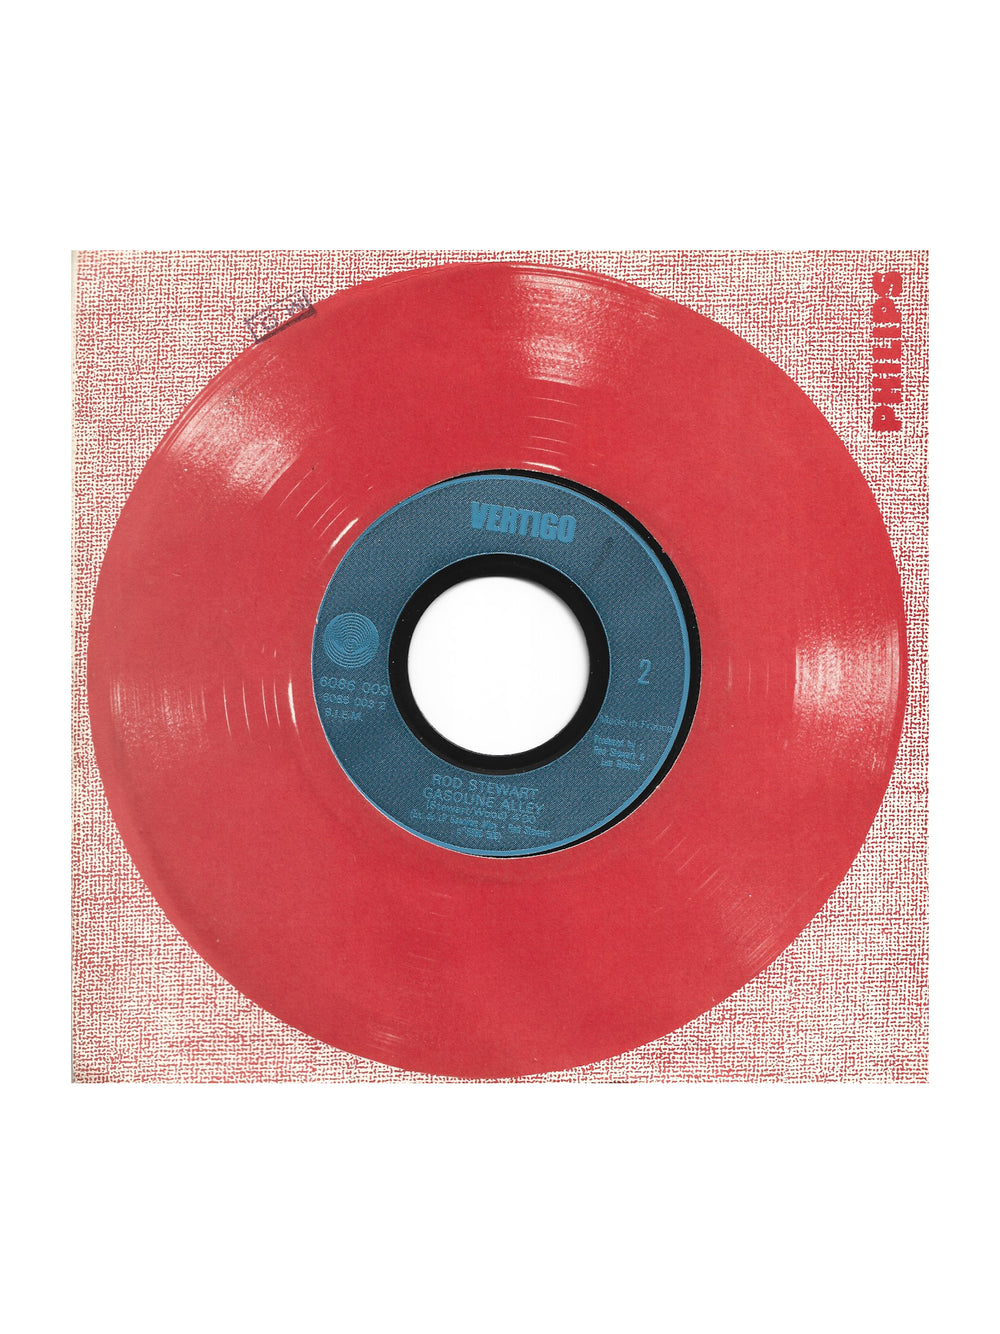 Rod Stewart‎ - My Way Of Giving 7 Inch Vinyl FR Vertigo Promo Preloved:1970